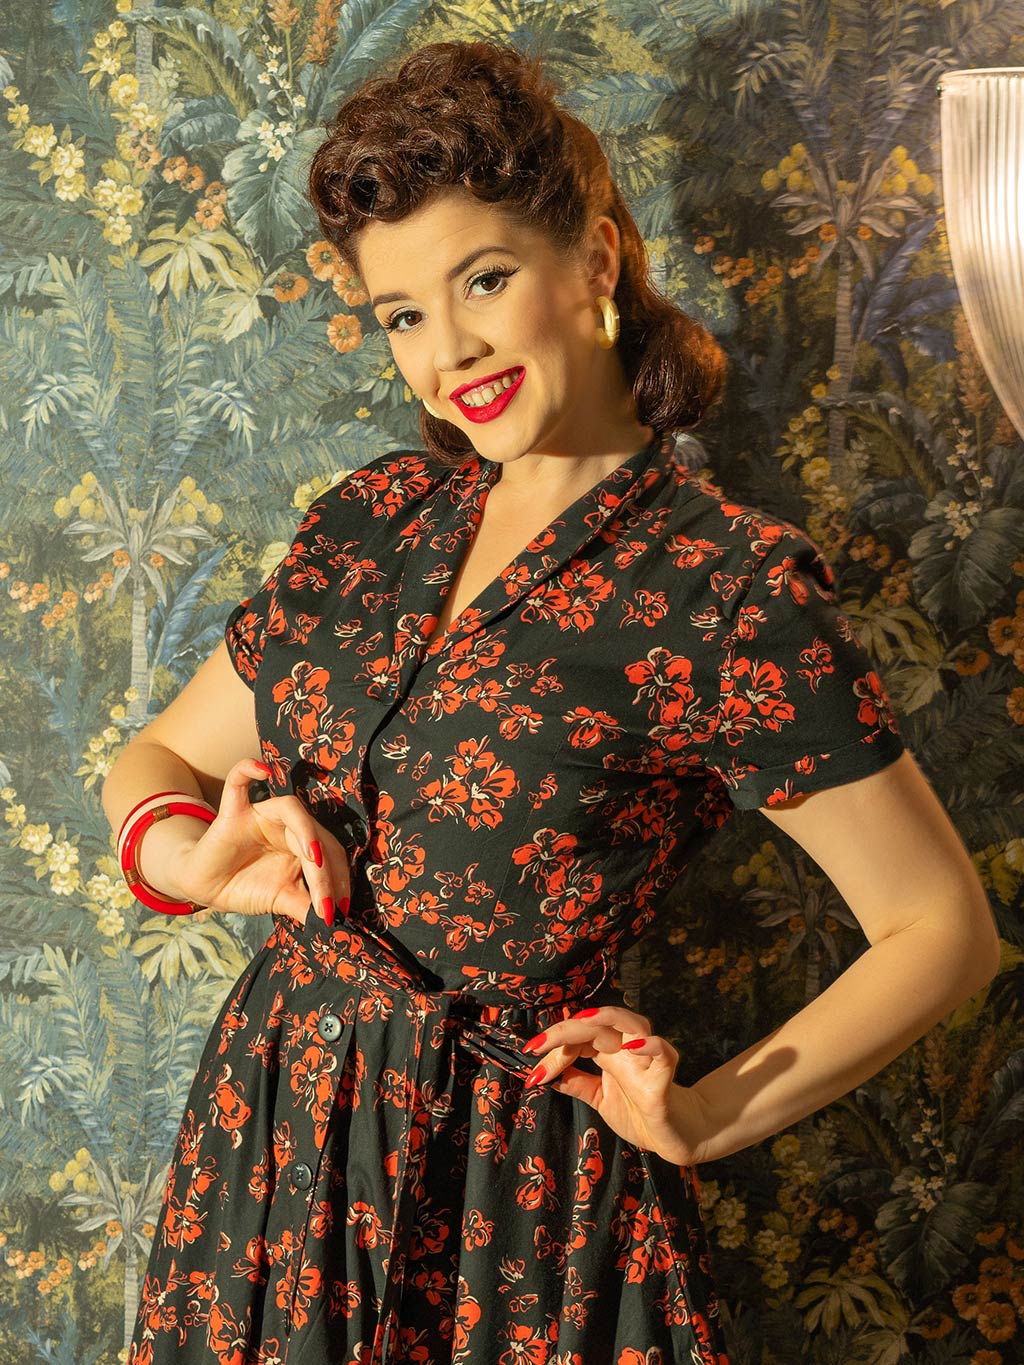 1950s dress